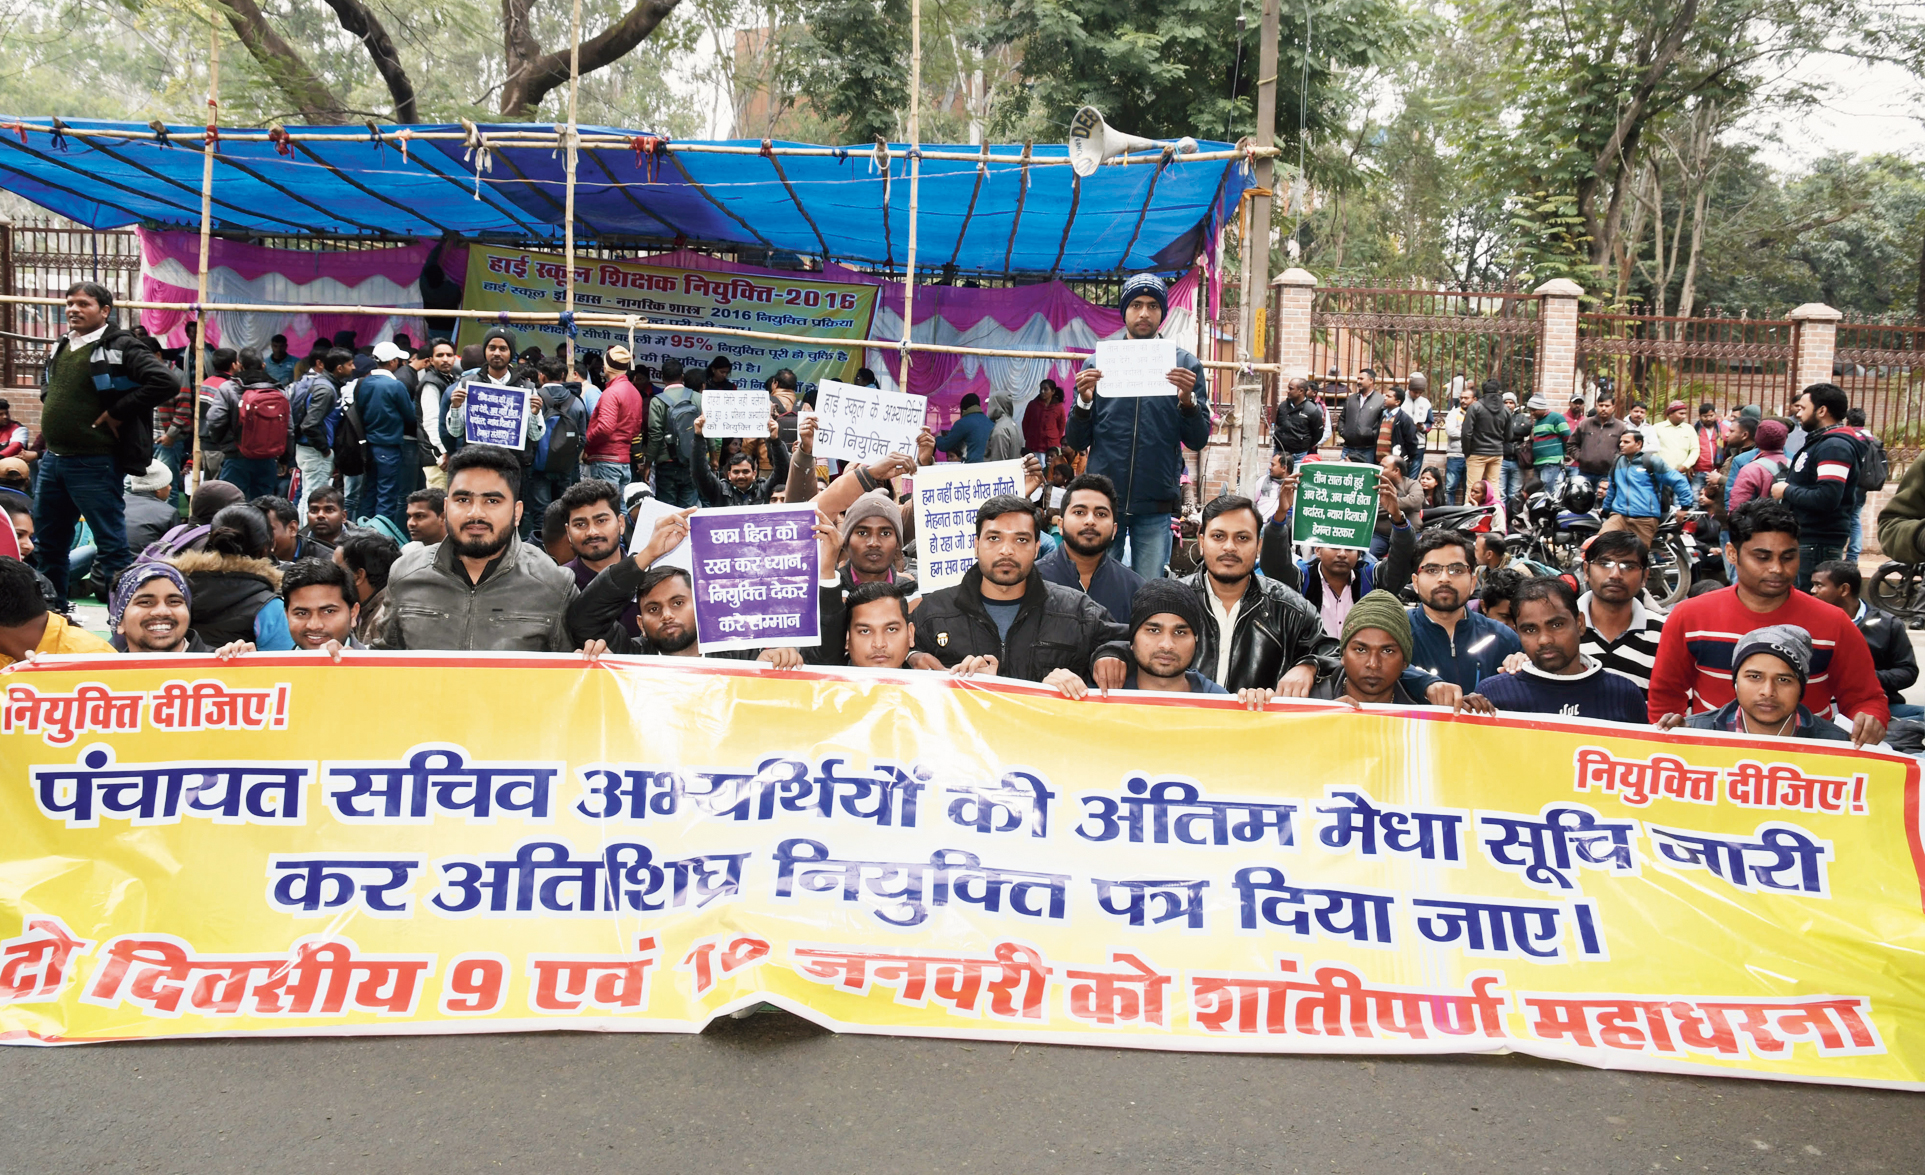 The demonstration underway outside Raj Bhavan in Ranchi on Thursday. 
